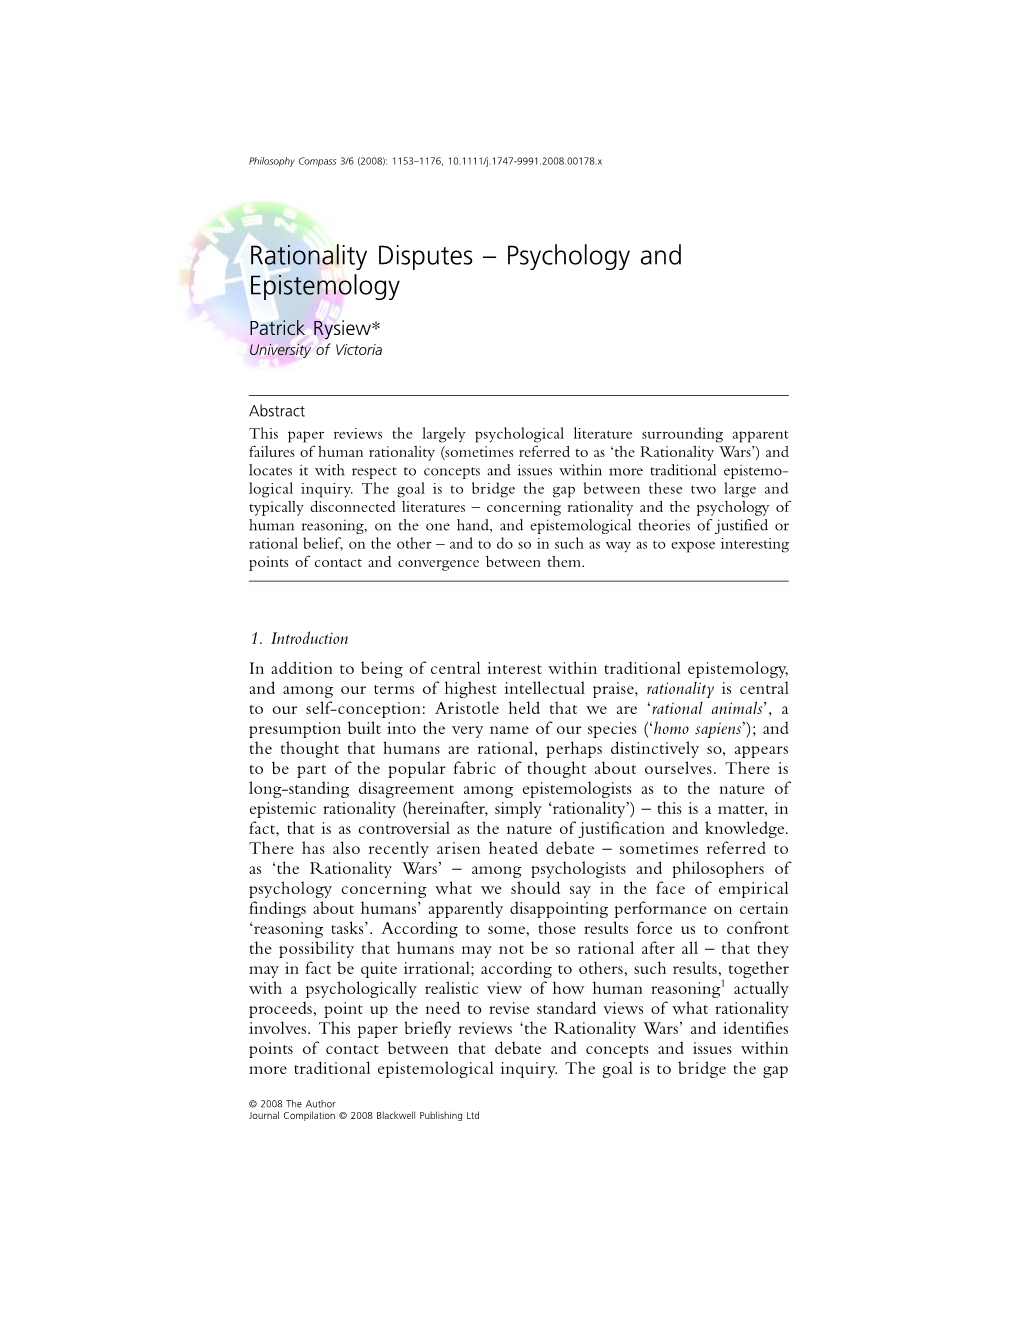 Rationality Disputes – Psychology and Epistemology Patrick Rysiew* University of Victoria